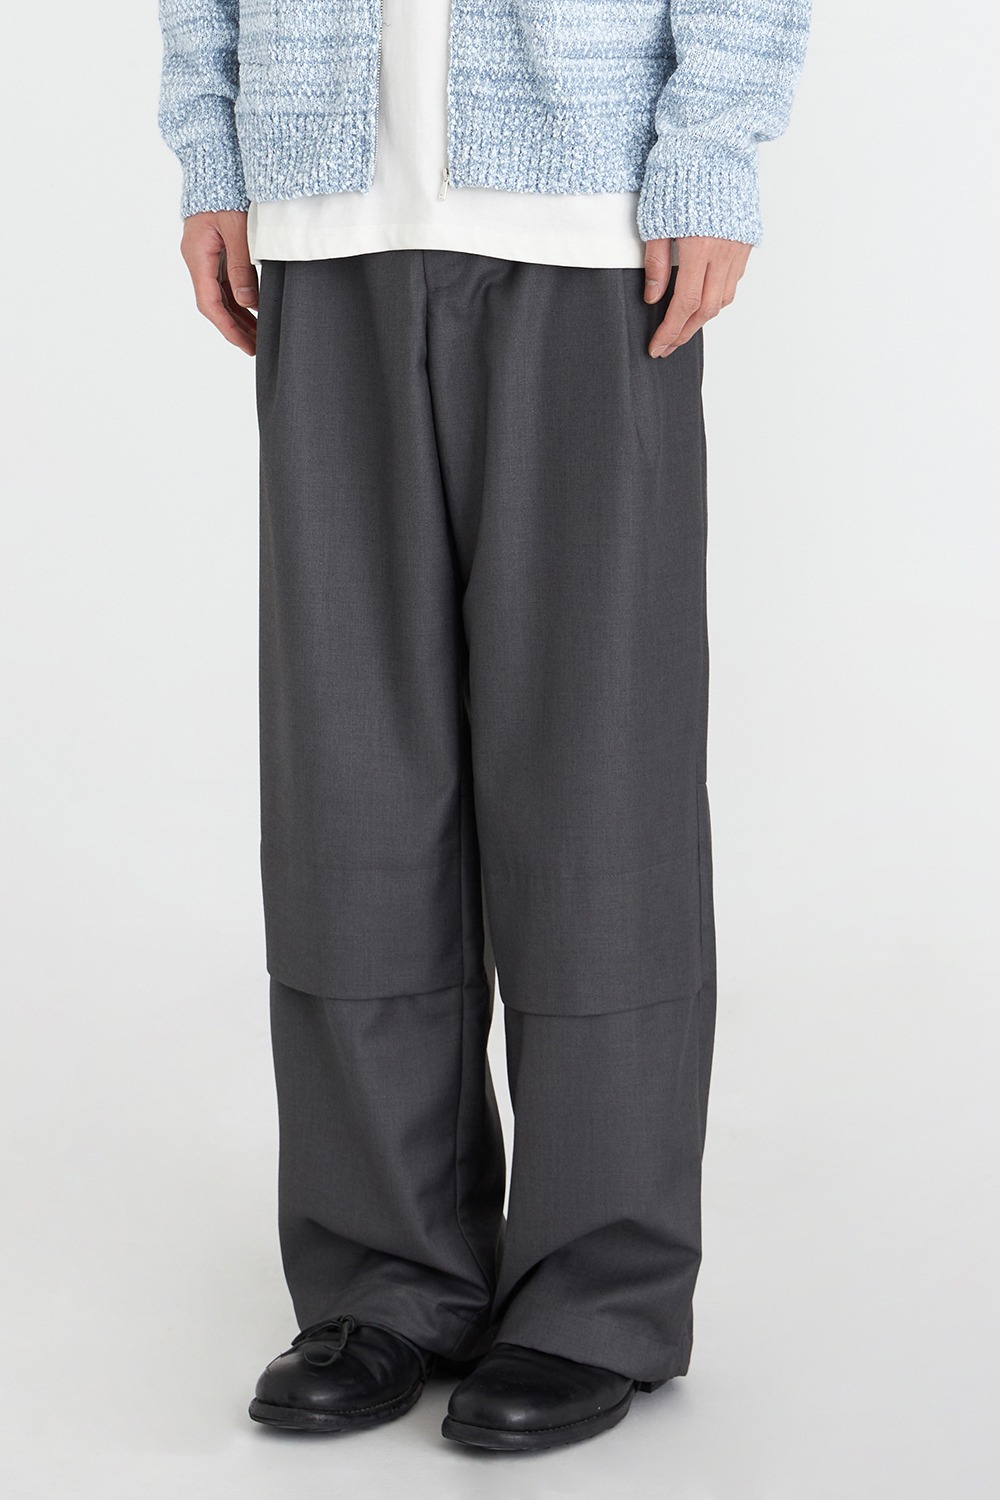 Layer Pants V2 - Charcoal Grey